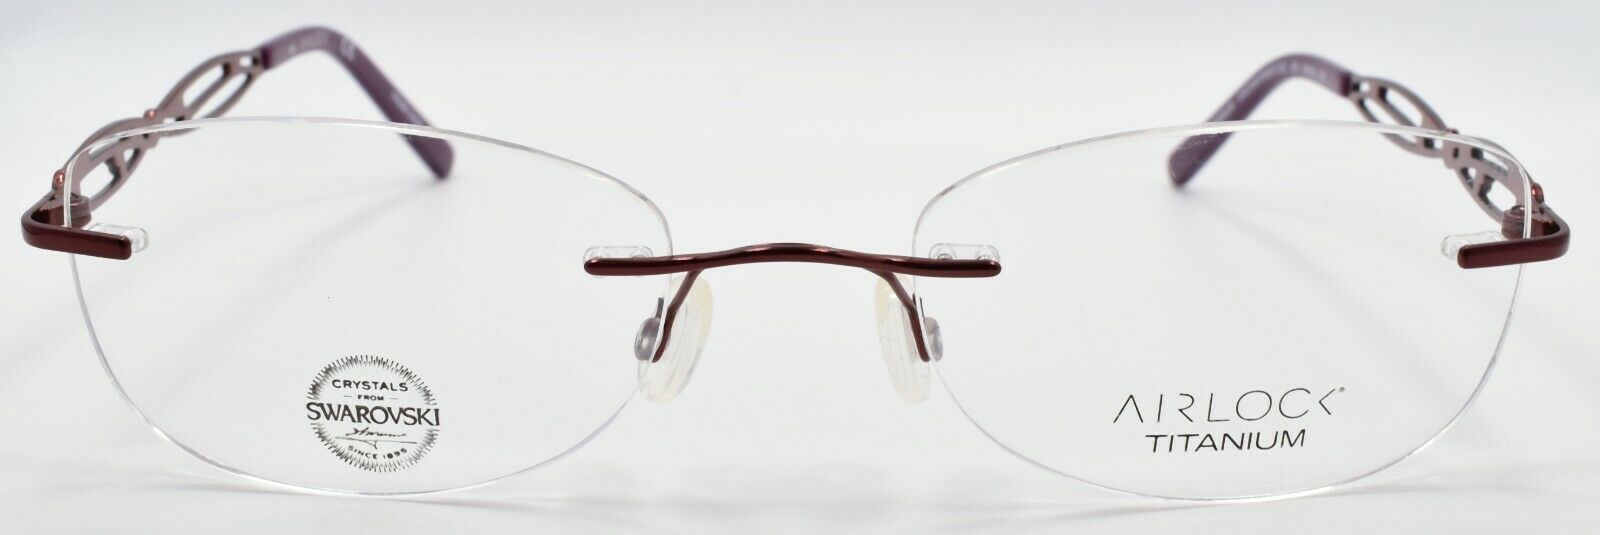 2-Airlock Enchantment 202 505 Women's Glasses Rimless 49-18-140 Plum w/ Swarovski-886895380997-IKSpecs